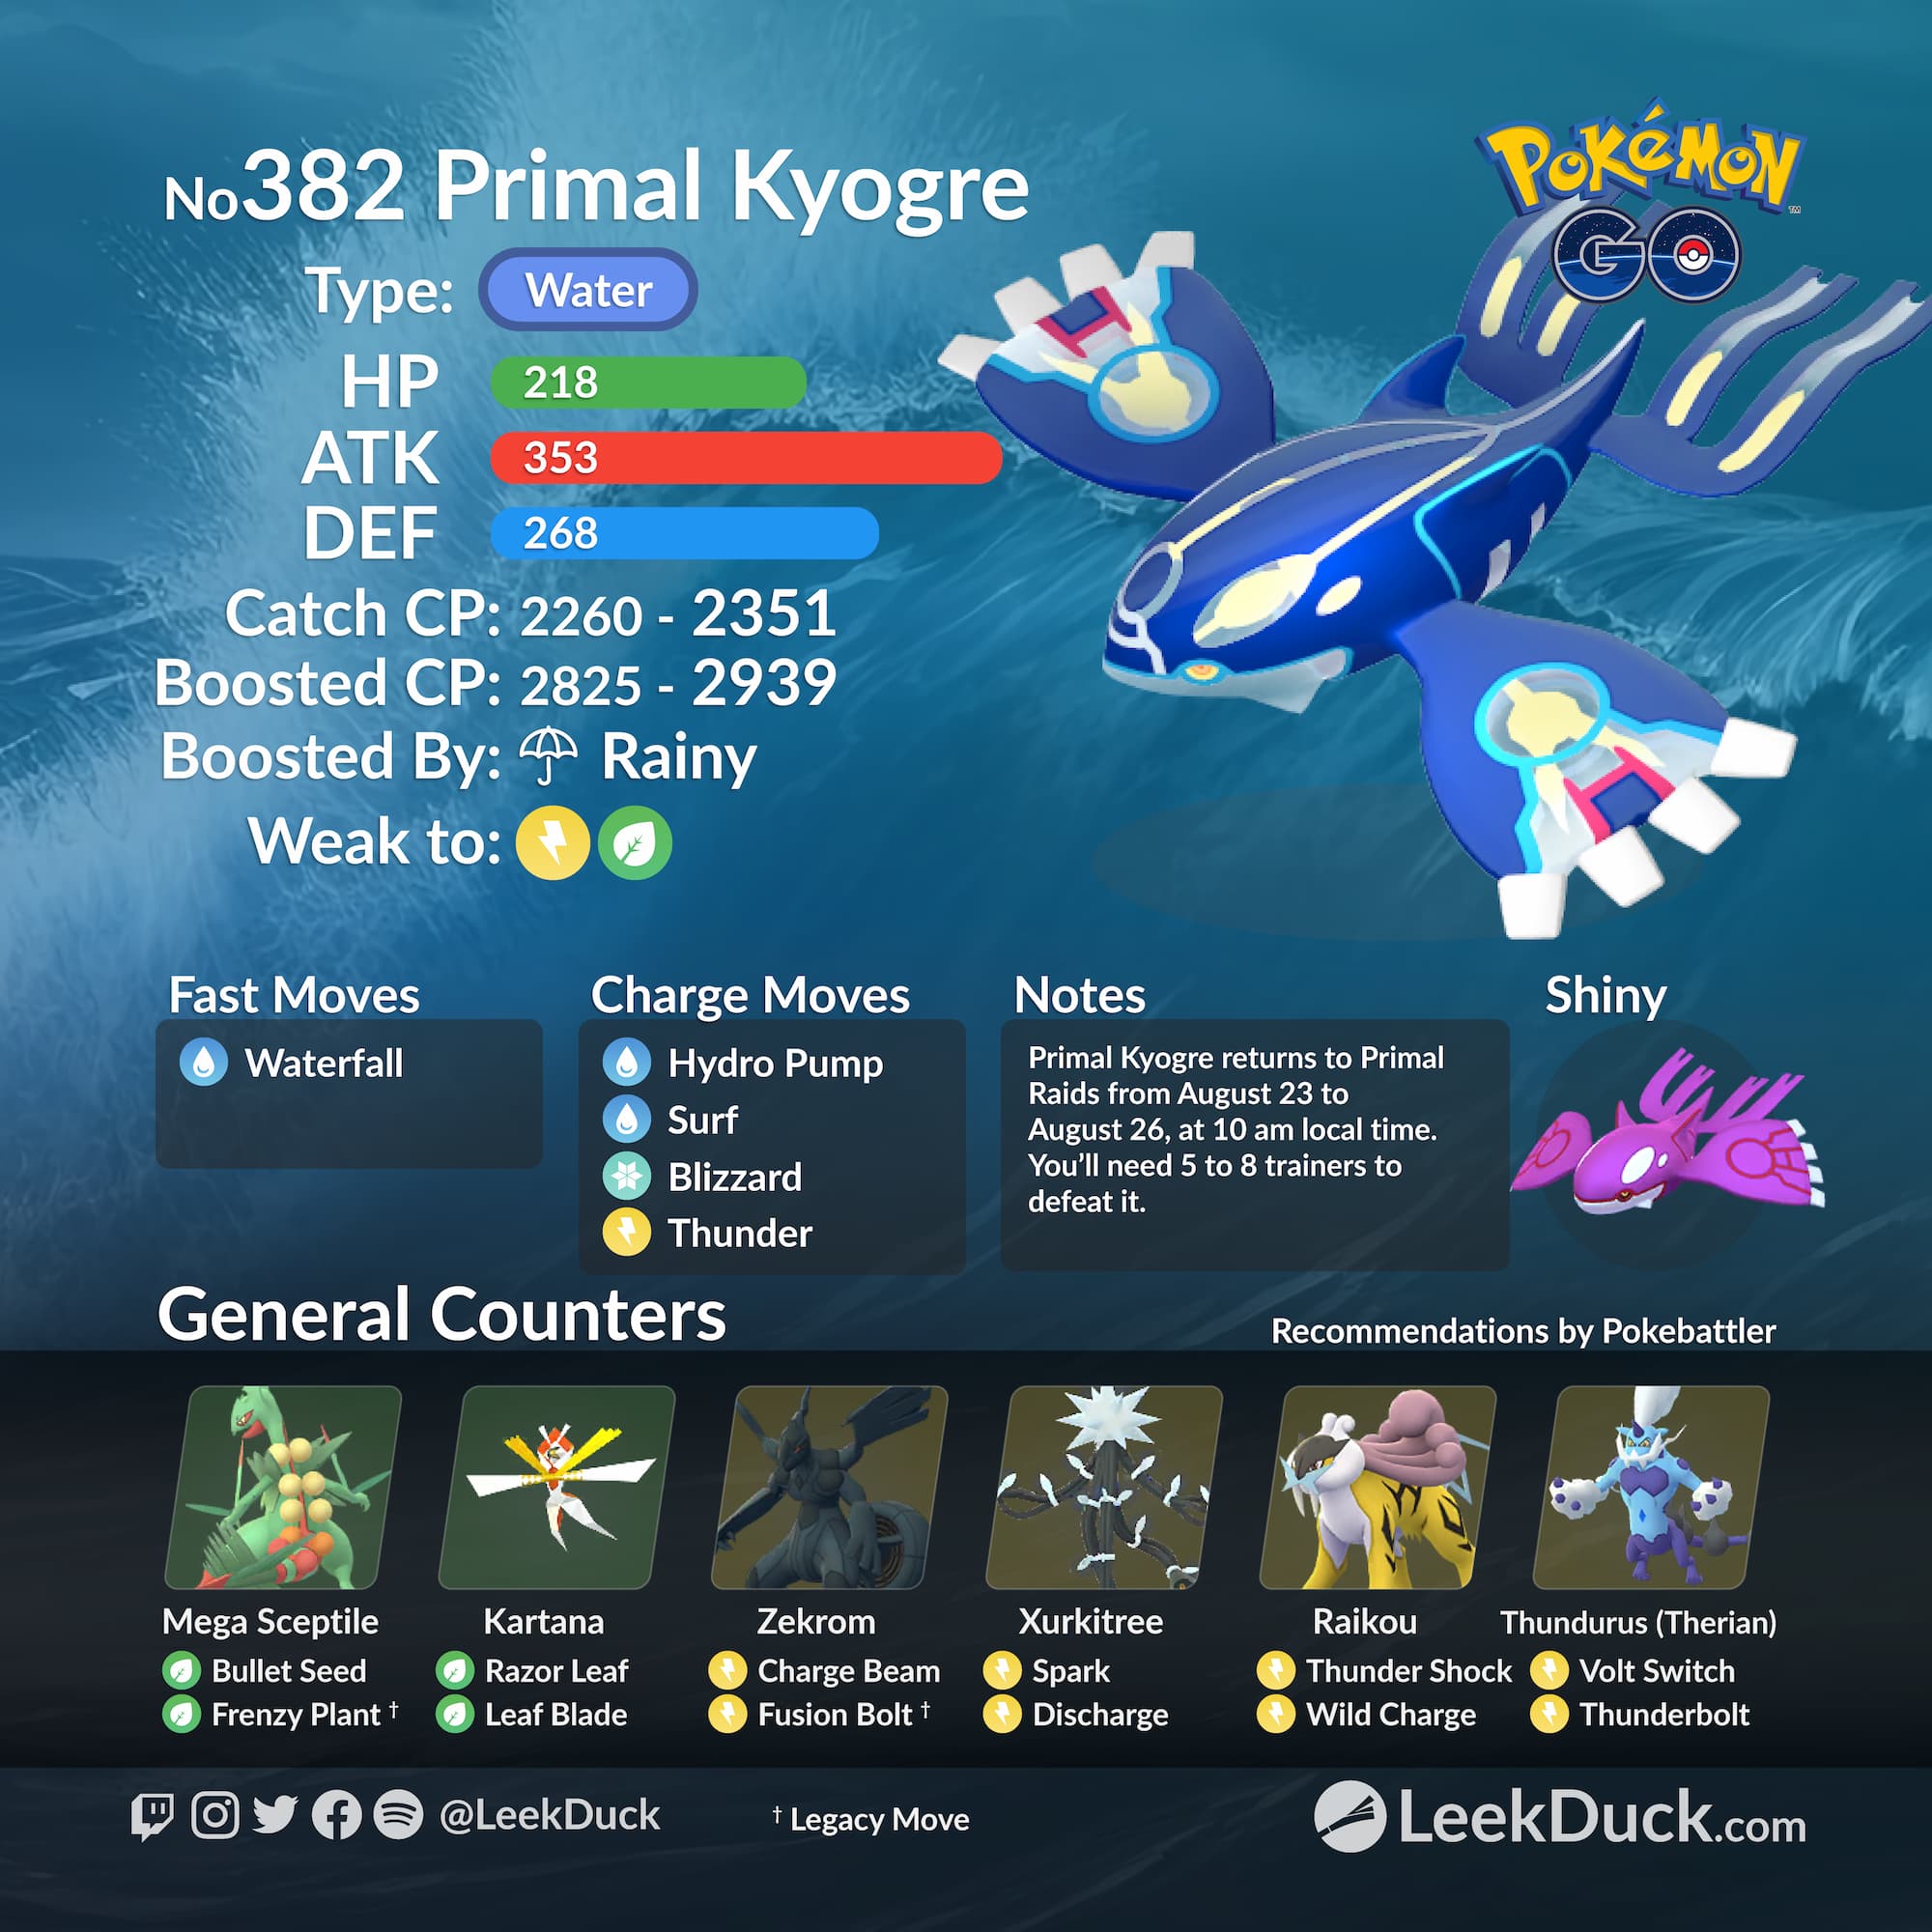 Pokémon Go' Raid Boss Update: Shiny Groudon and Kyogre Return